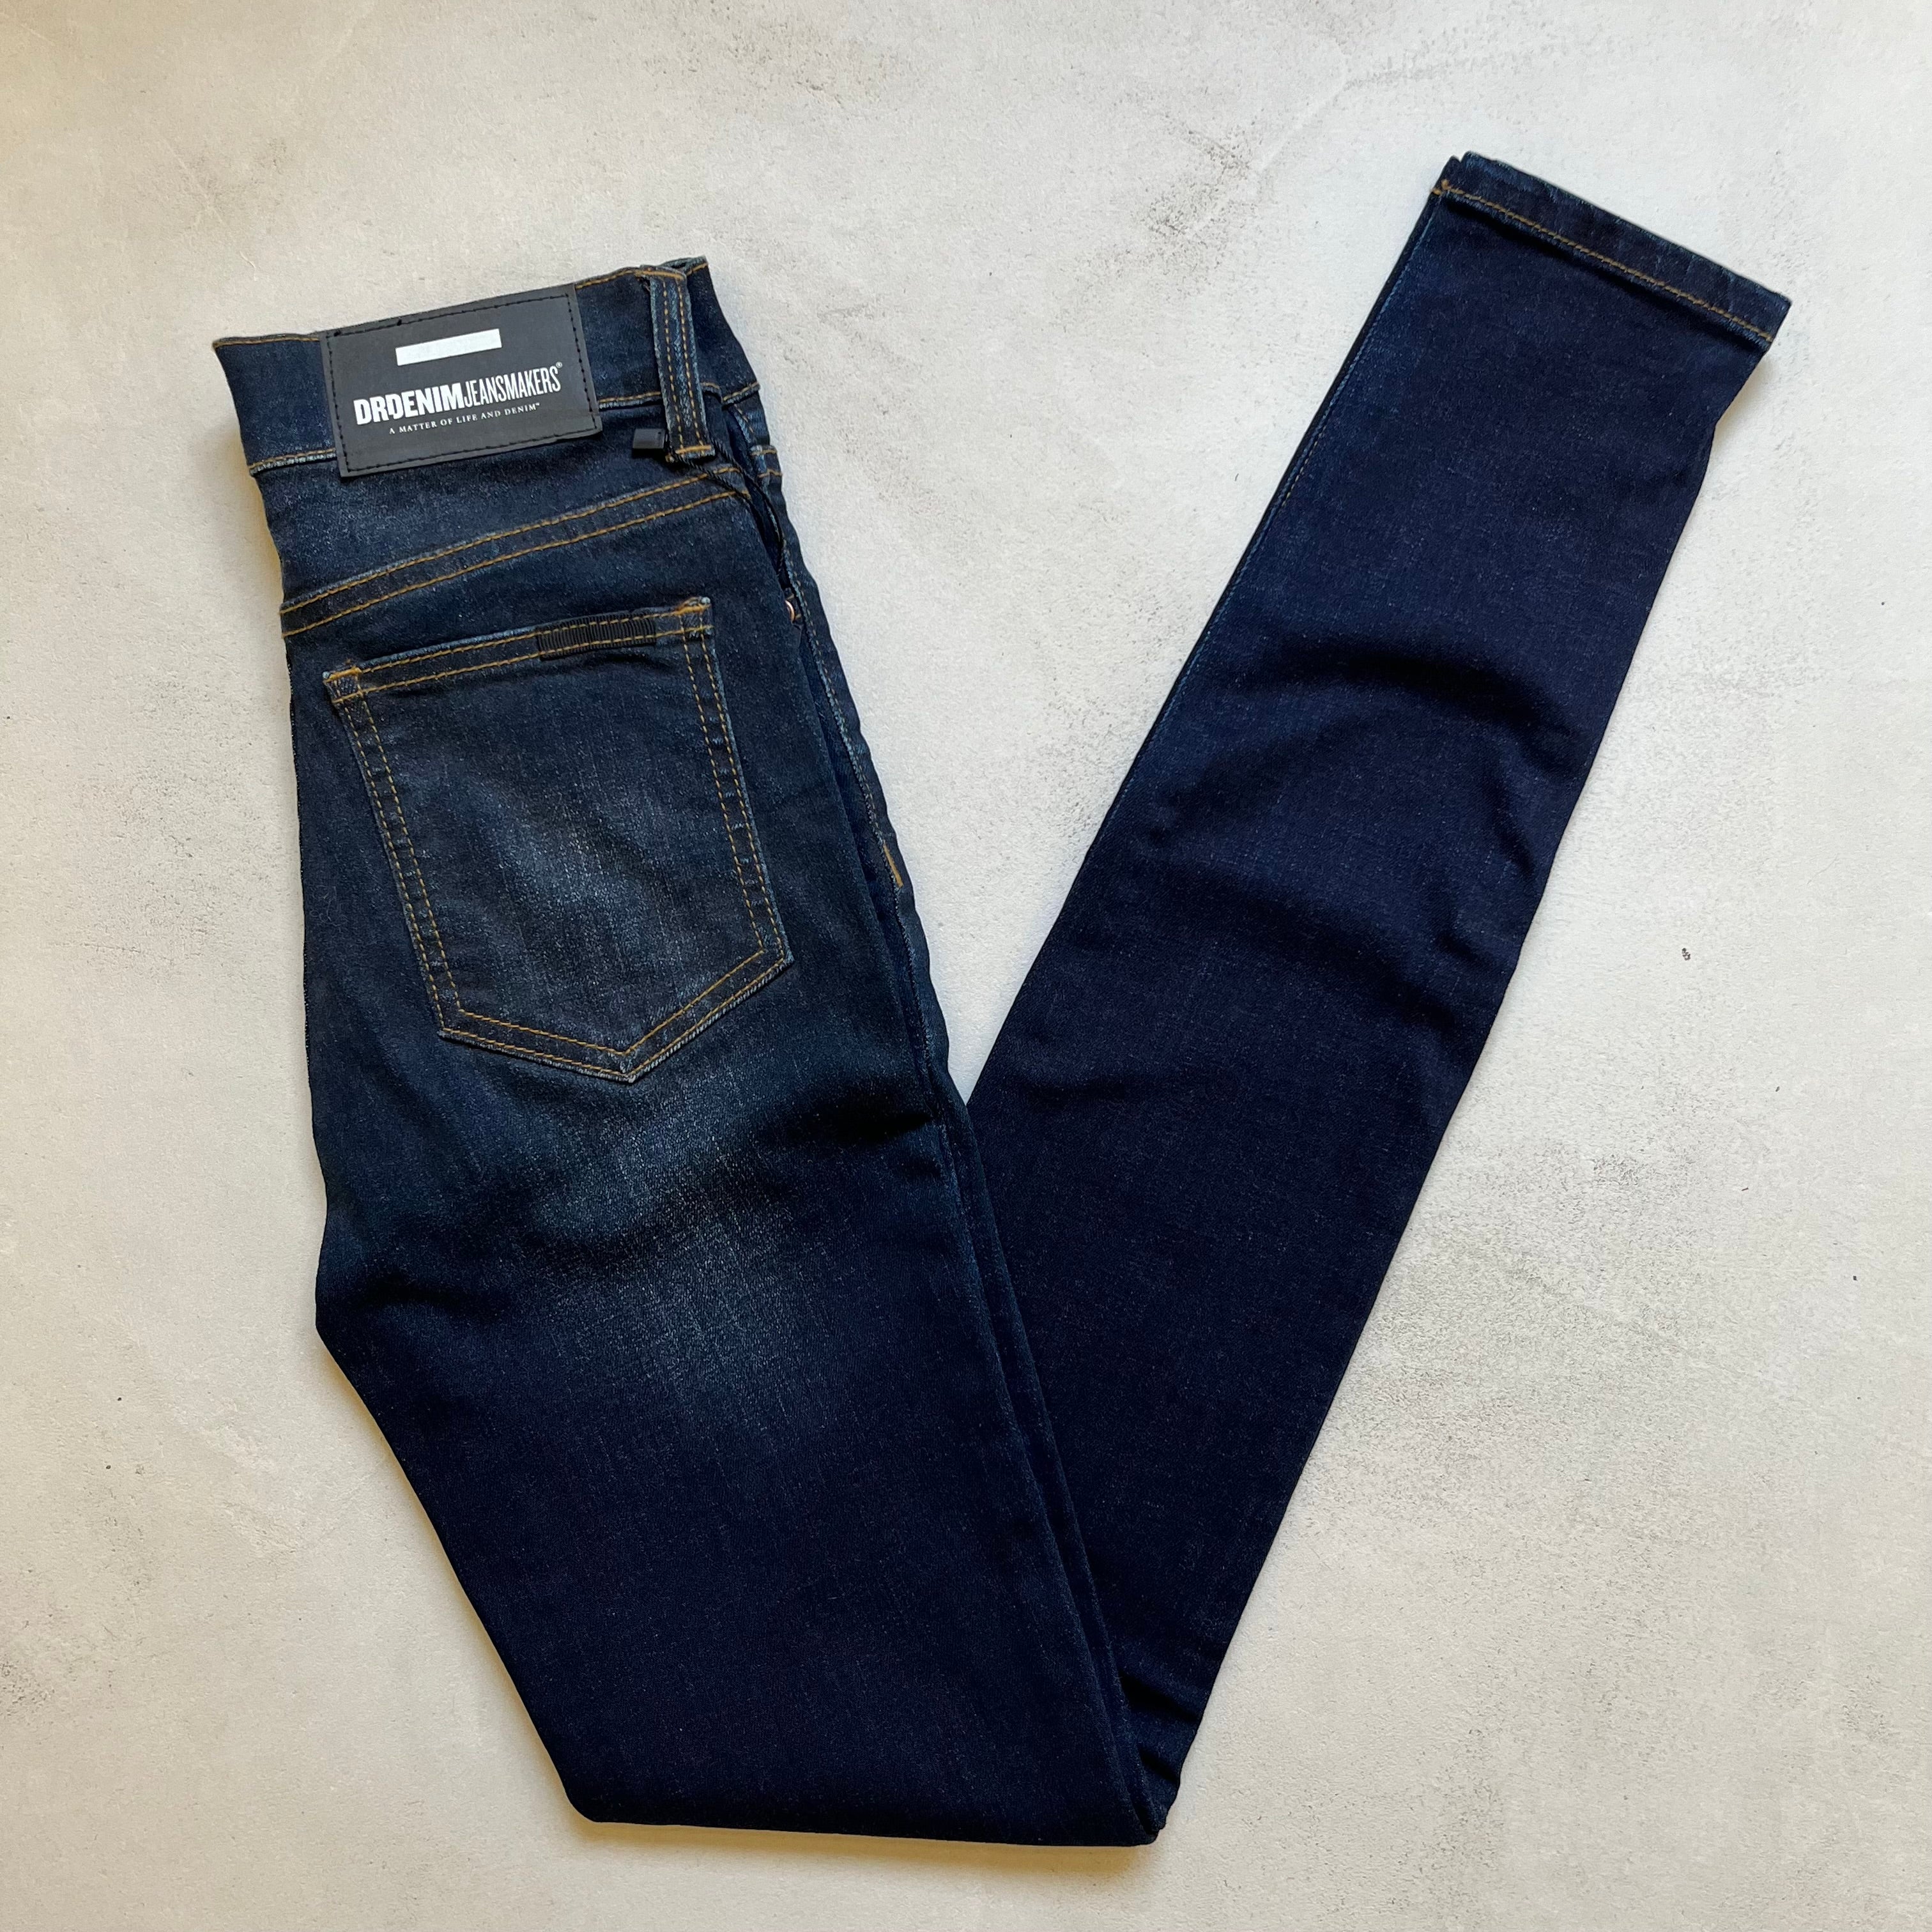 A pair of Dr Denim Regina - Dark Blue mid-weight stretch denim skinny jeans on a white surface.